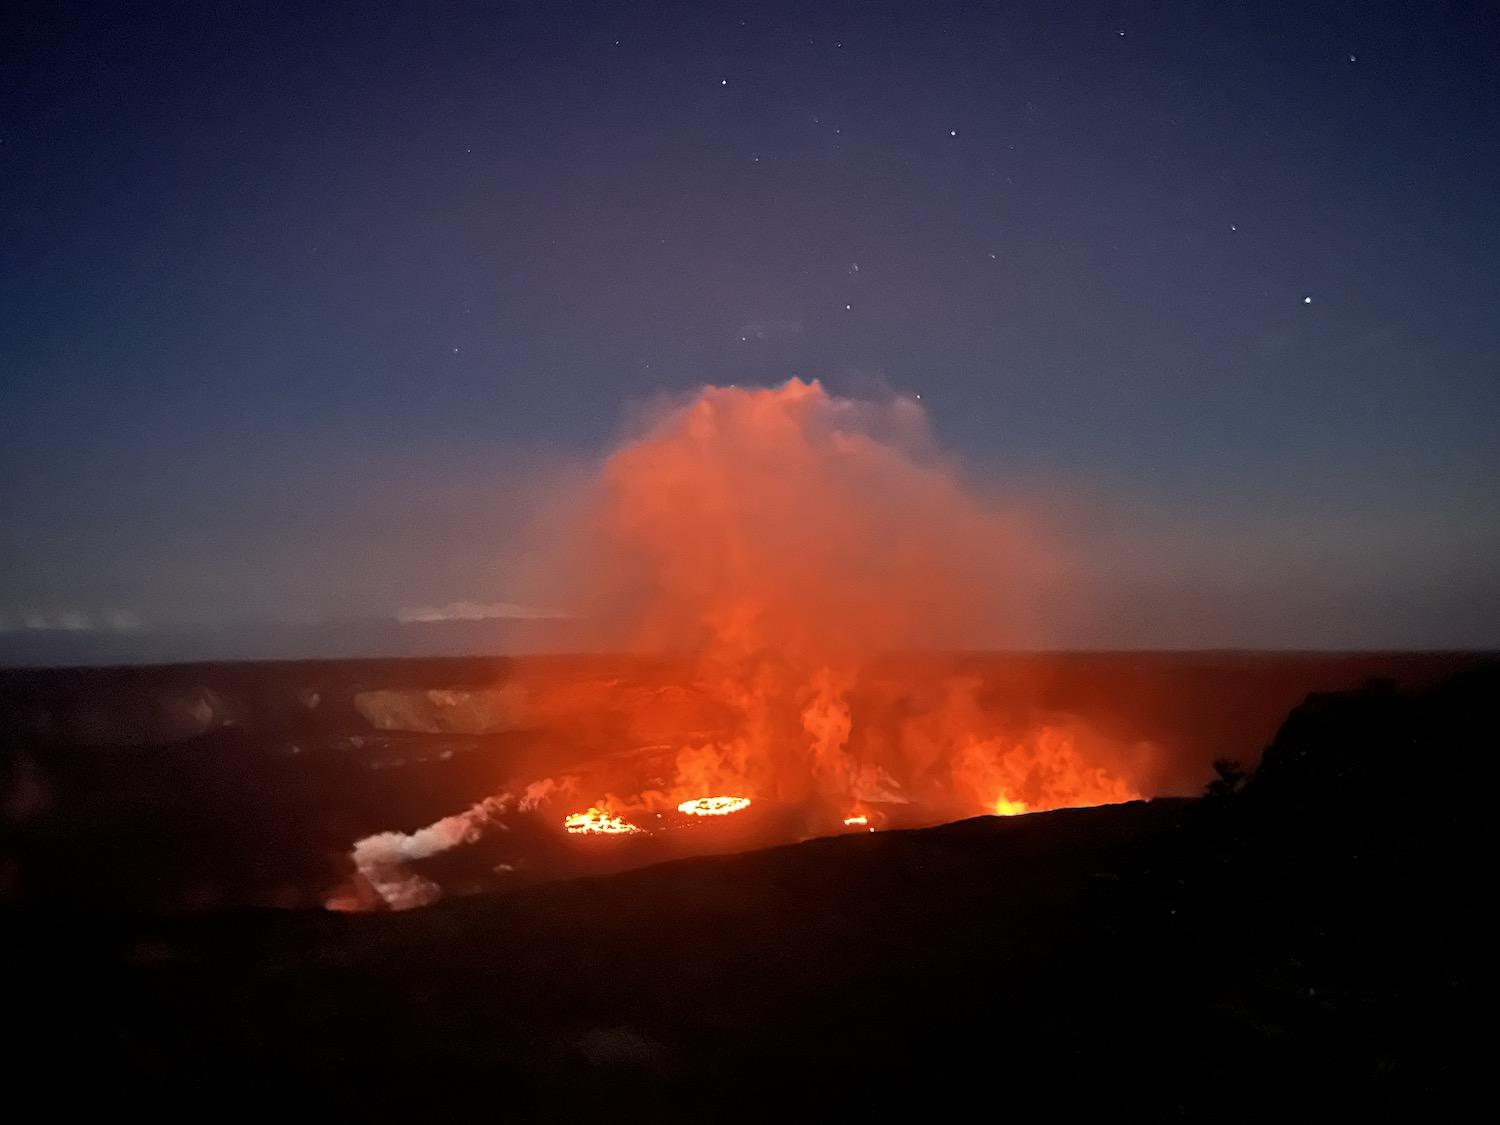 At night in February, a view of the Kīlauea volcano lava lake within Halema'uma'u crater.